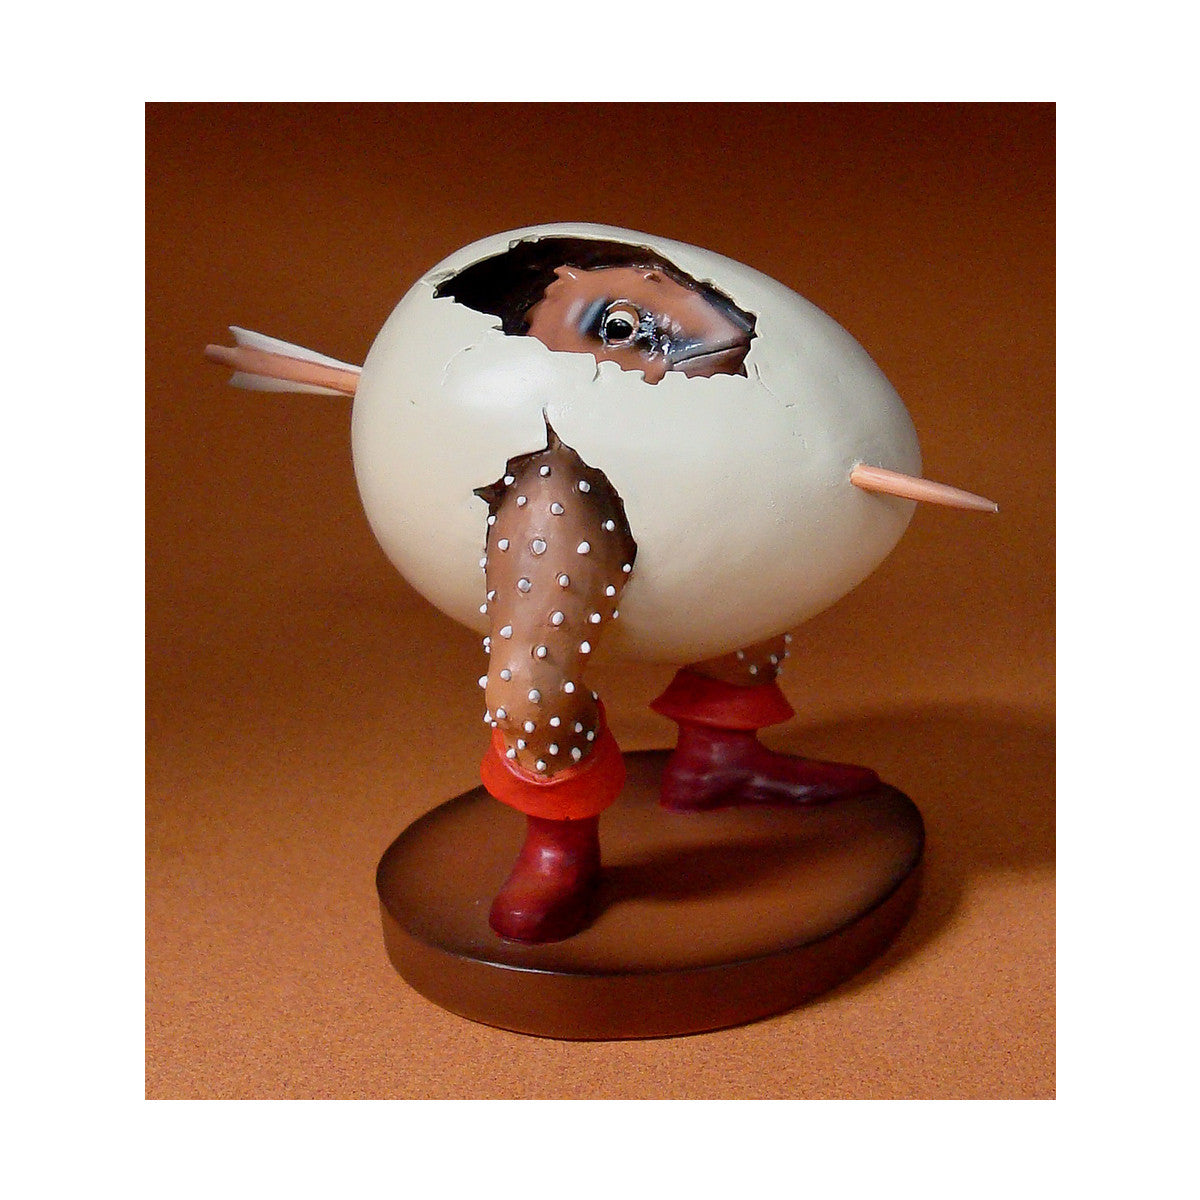 Bosch Egg Monster - Designer Studio - Quirky objects